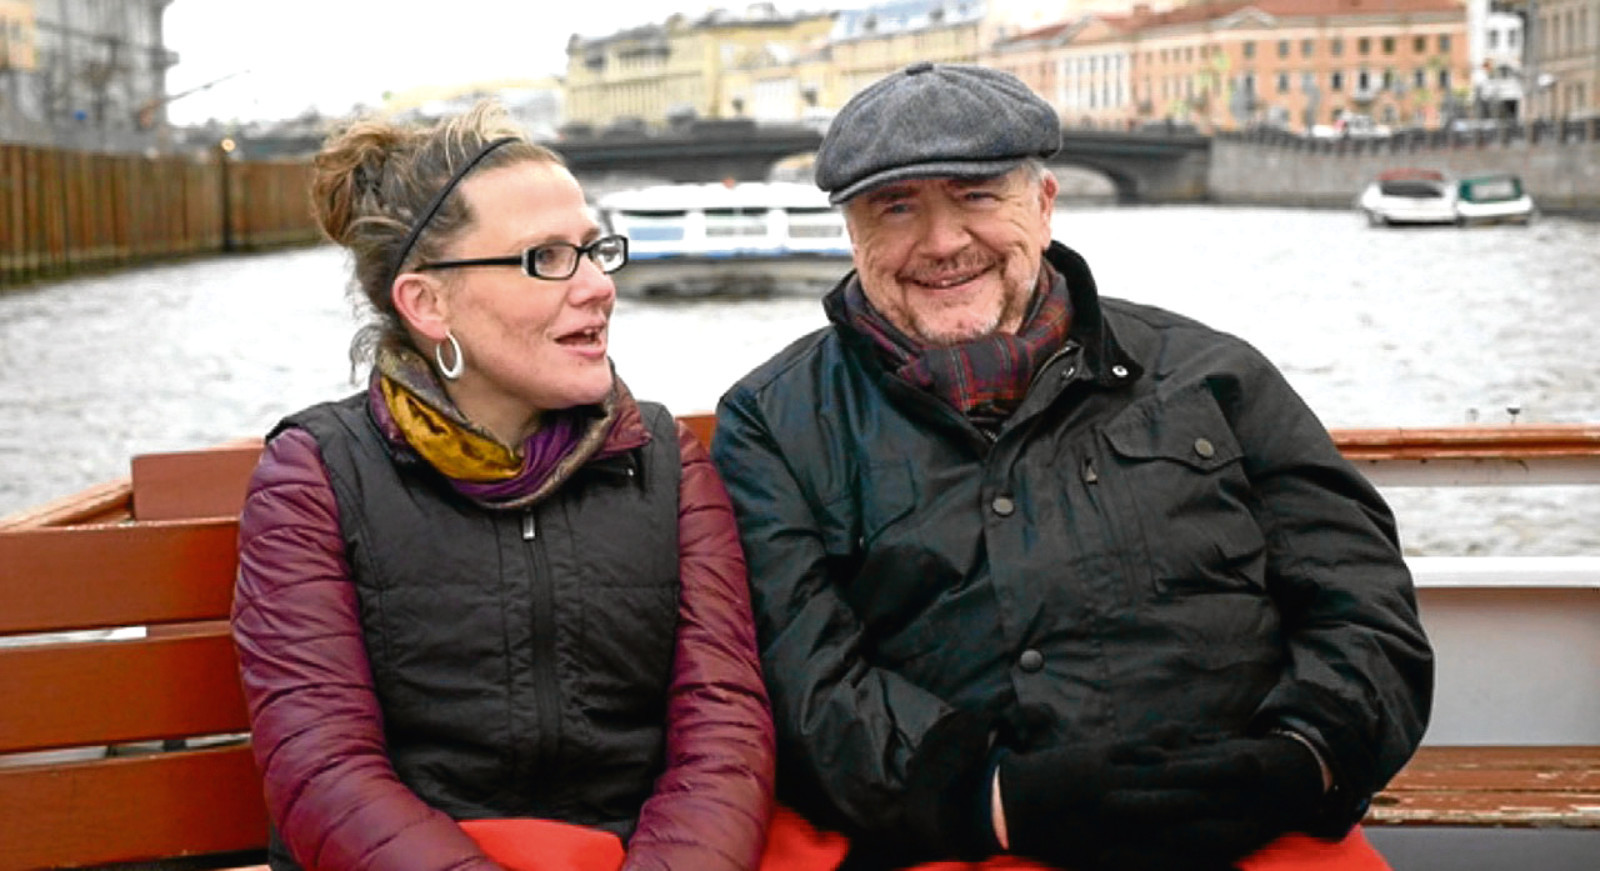 Actor Brian Cox with his daughter, Margaret, in Leningrad